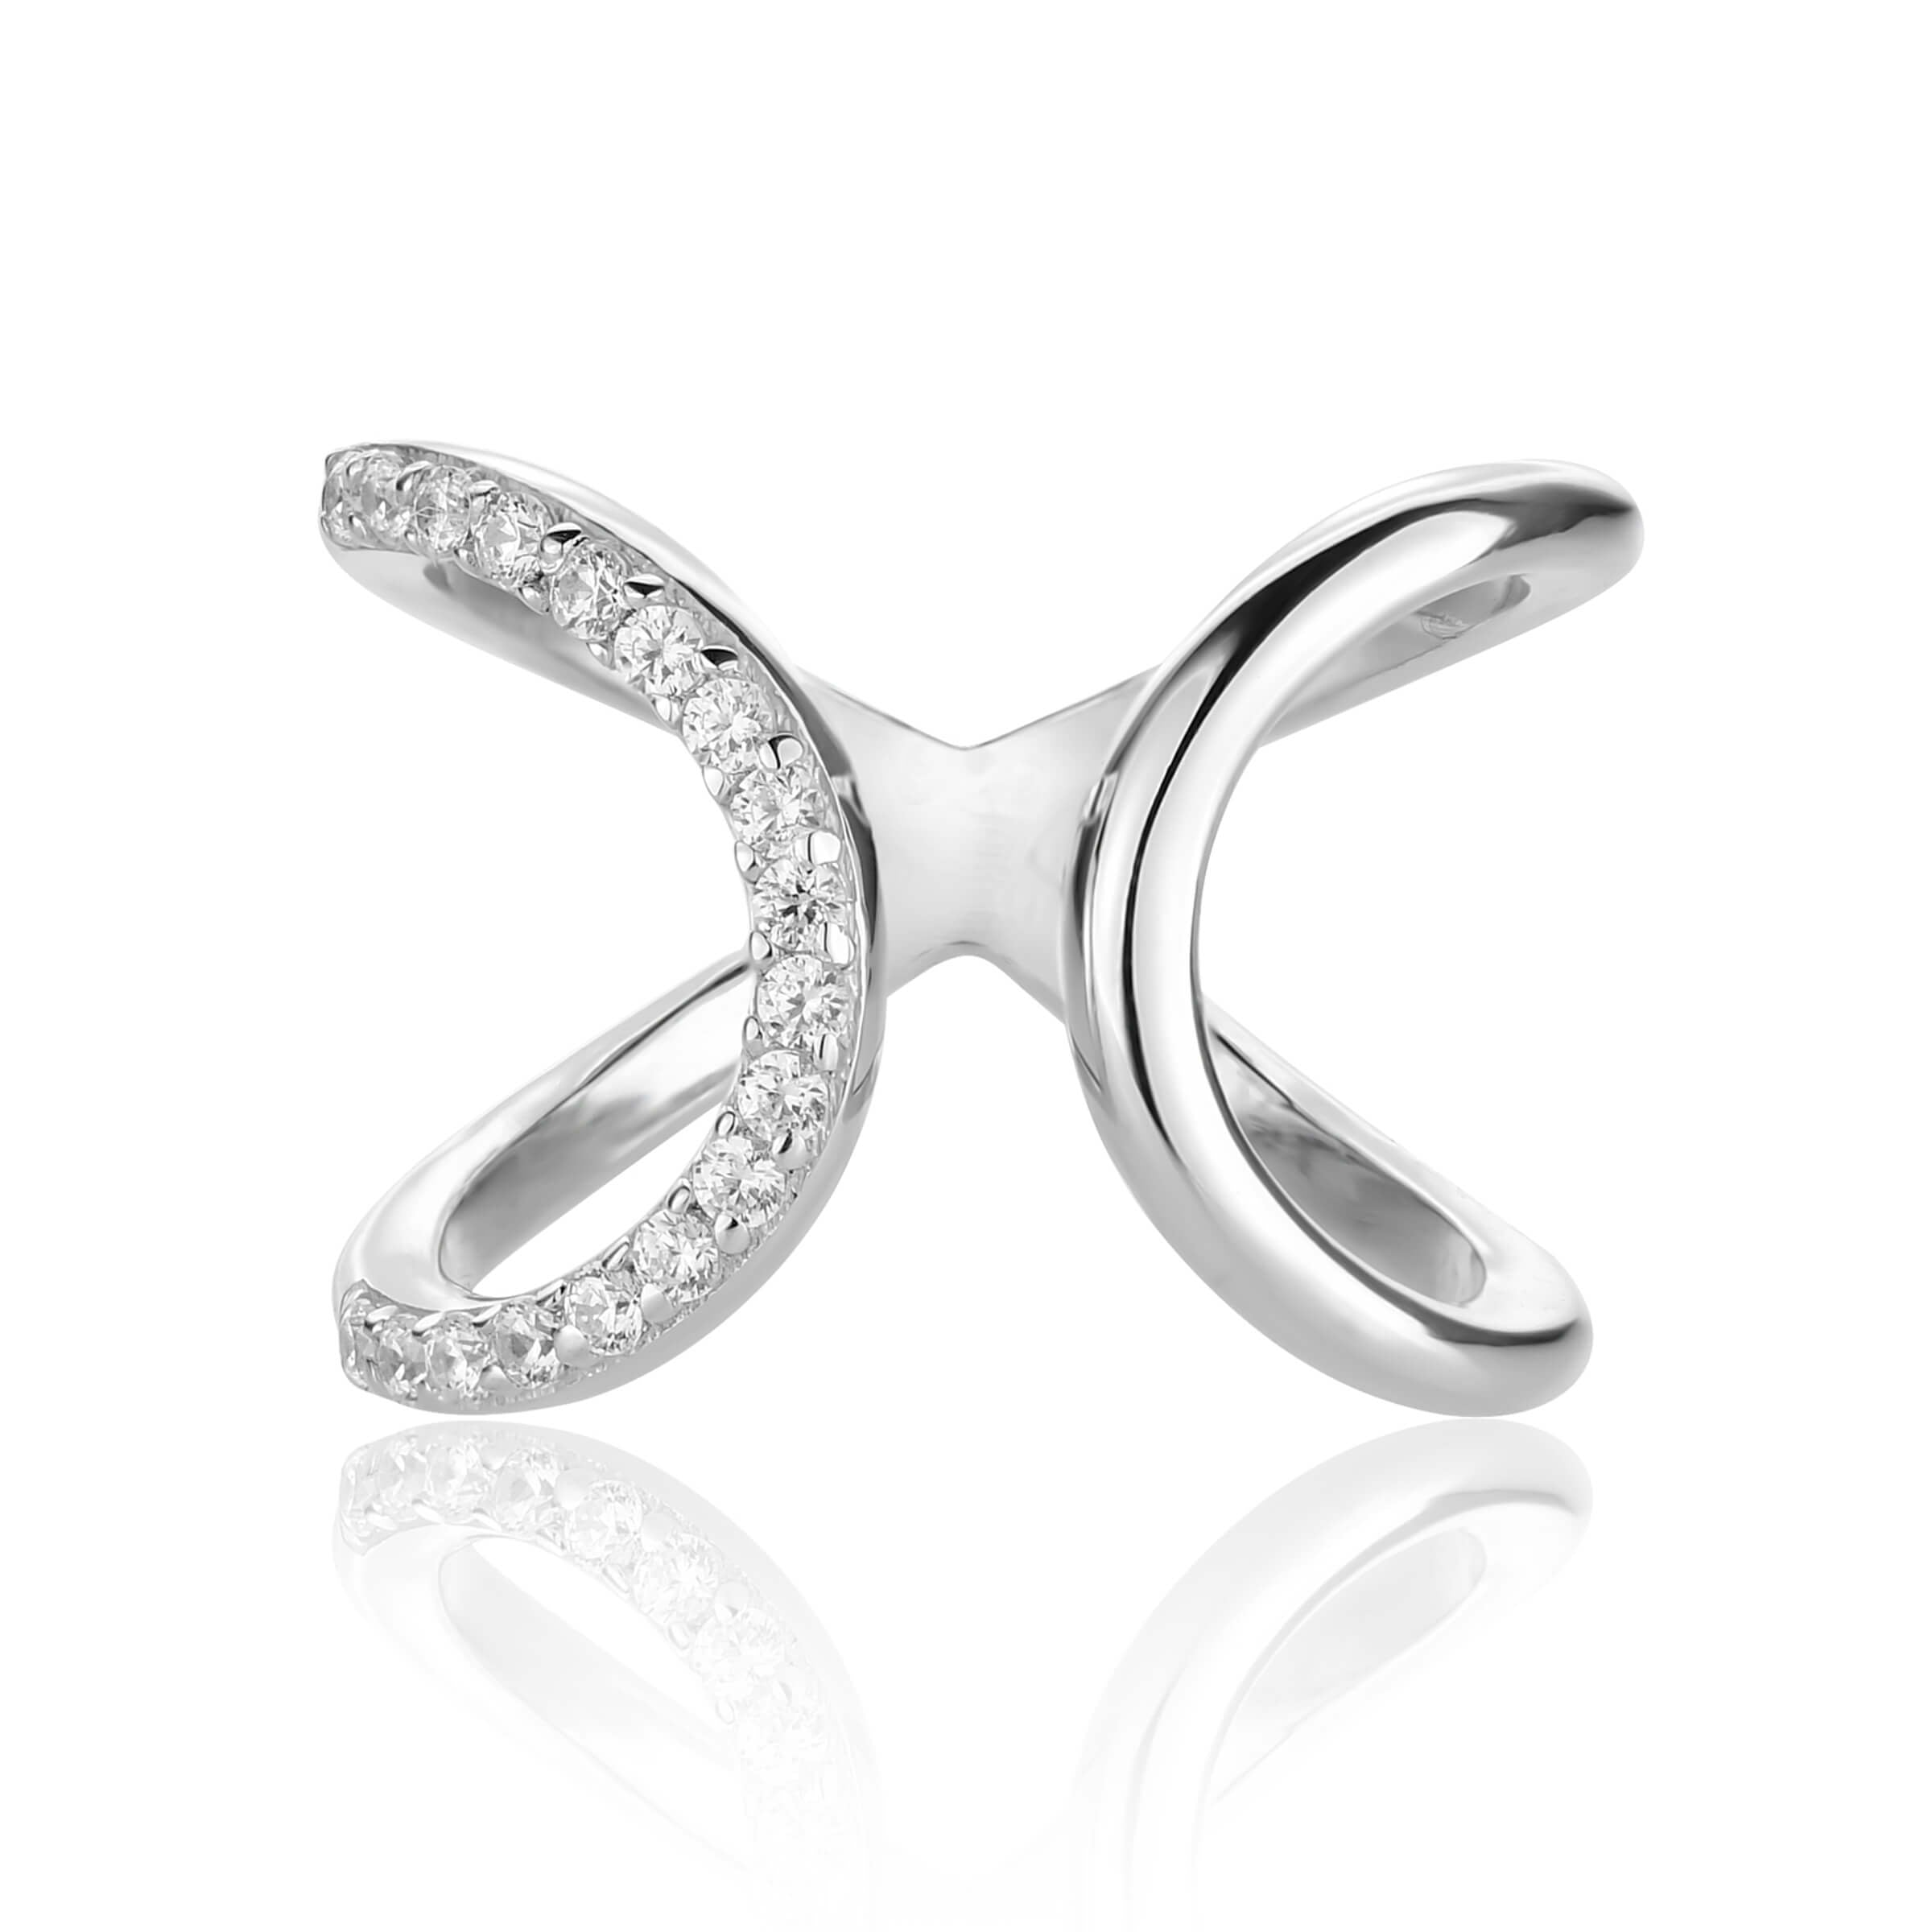 14K White Gold V-Shape Diamond Ring Guard (Size 7) Made In India  rm4297-025-wa - Walmart.com